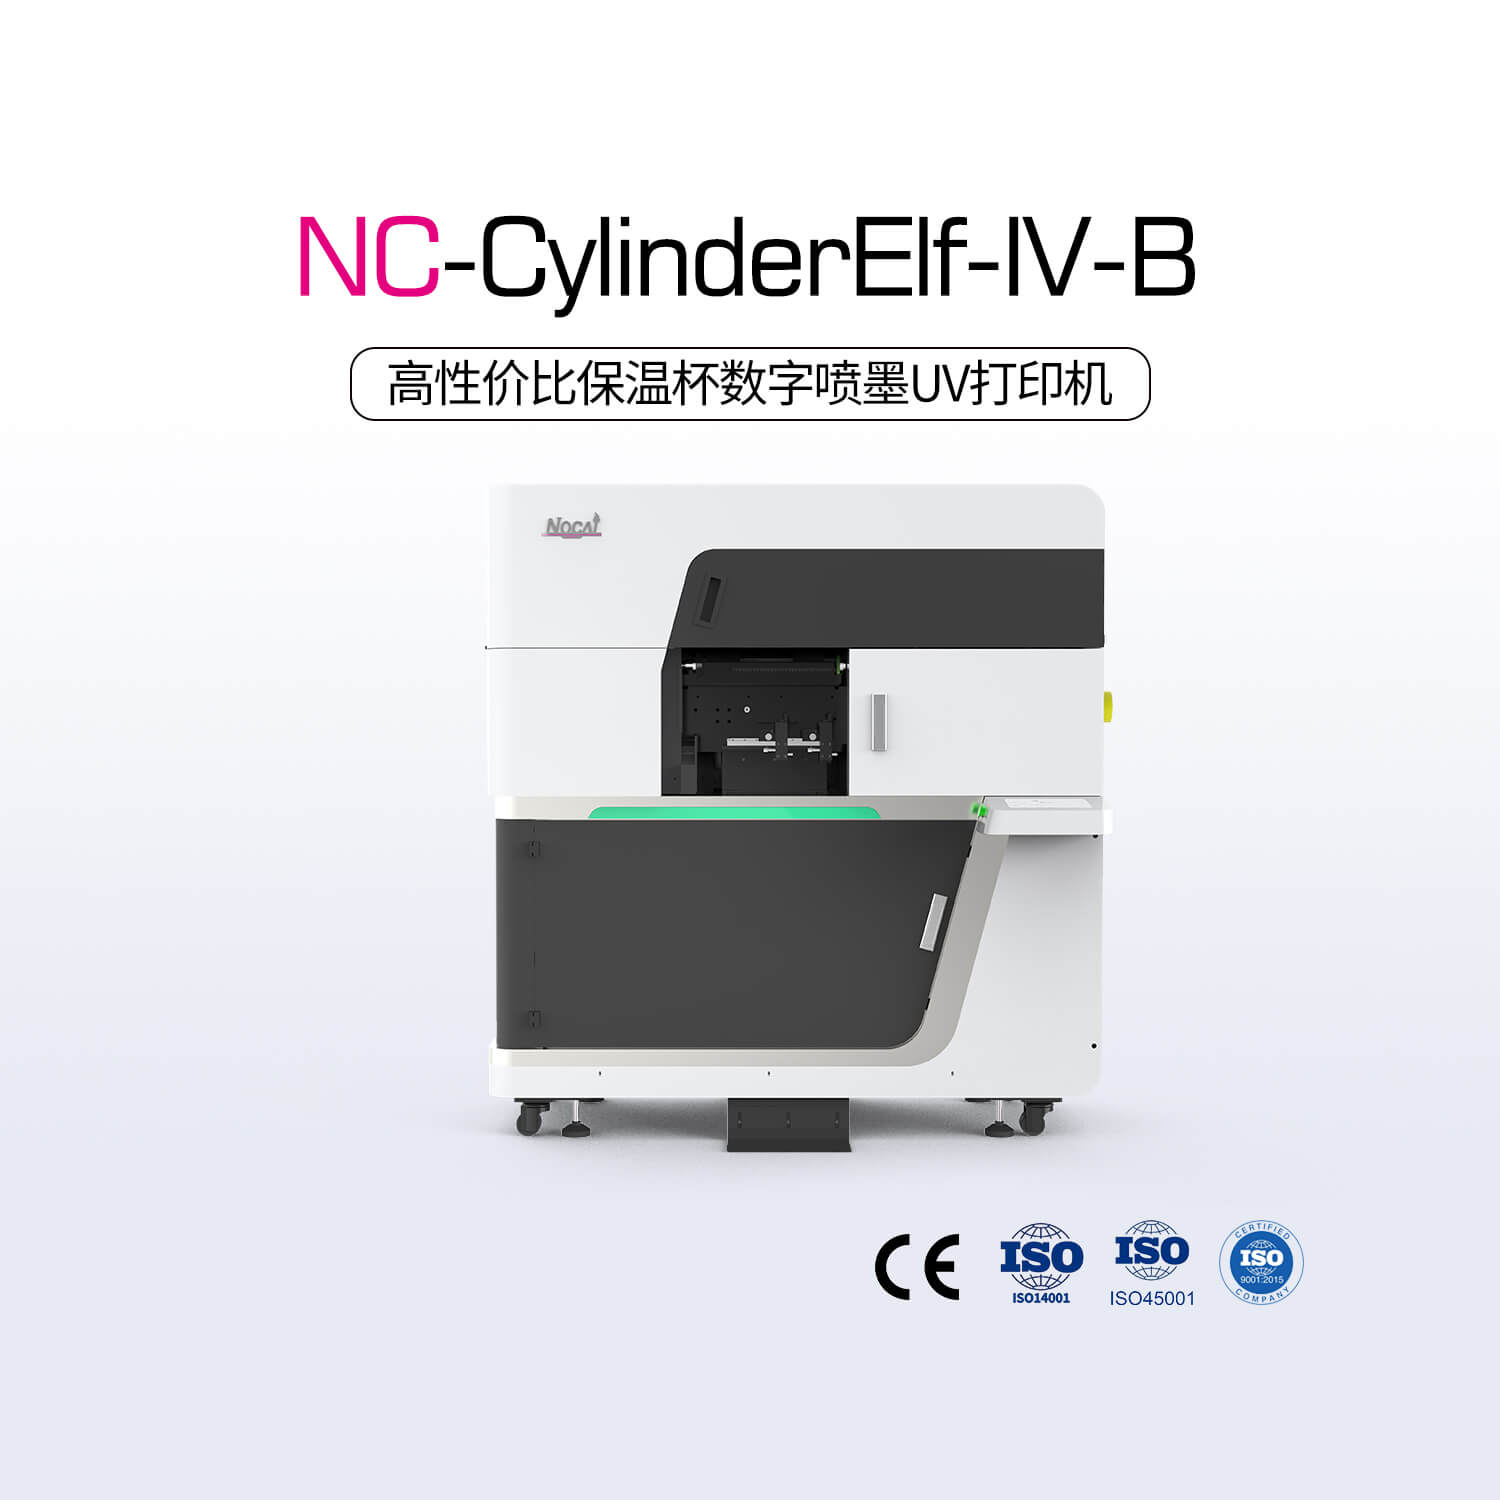 NC-CylinderElf-IV-B